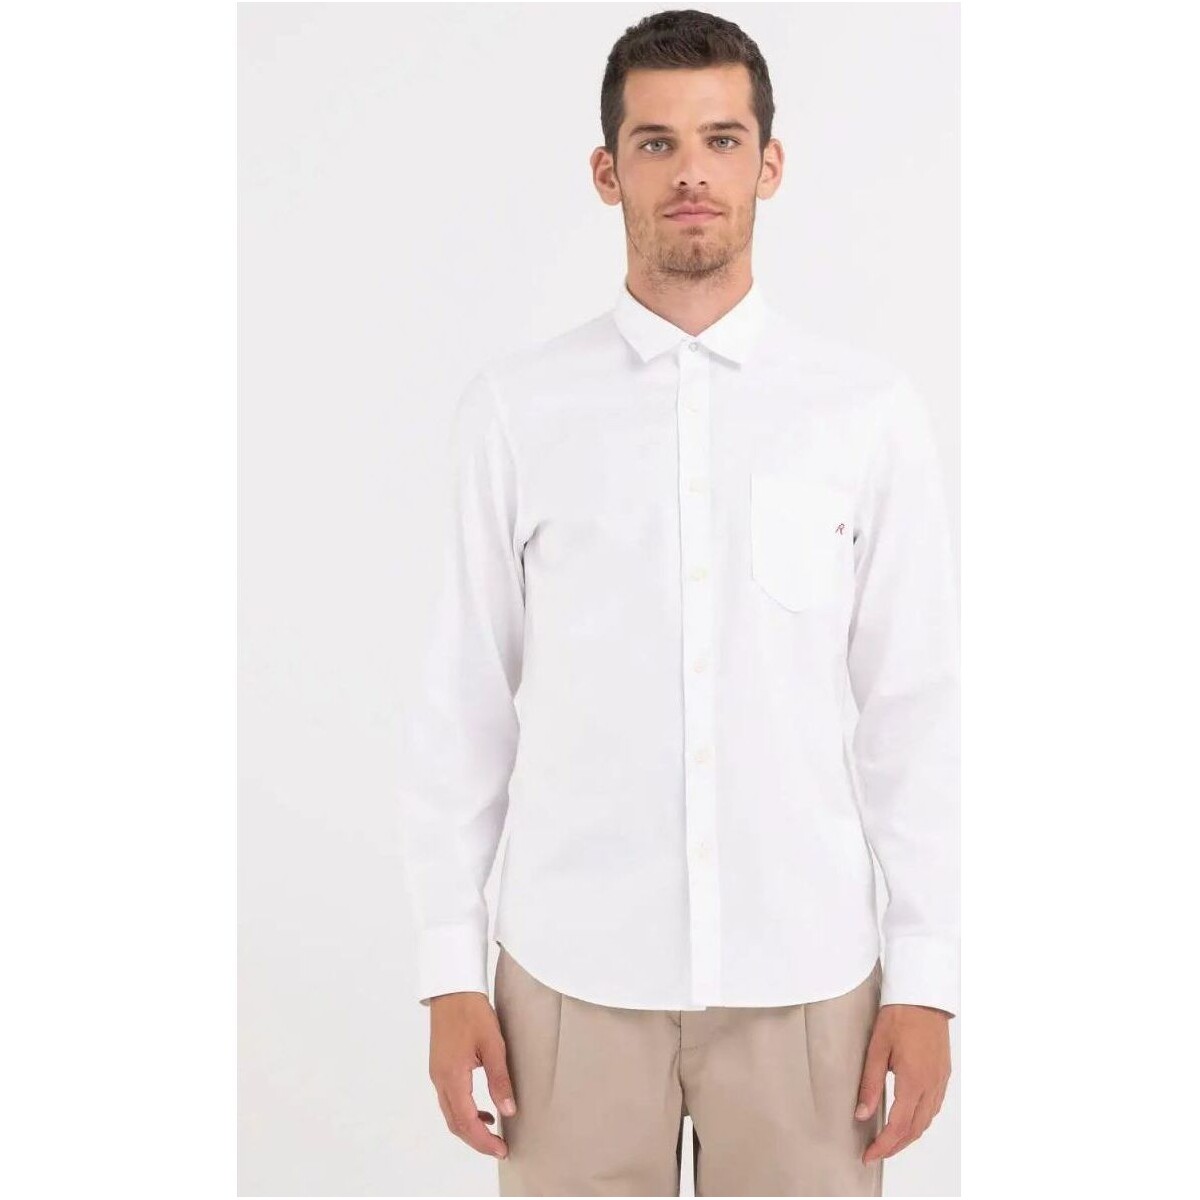 textil Hombre Camisas manga larga Replay M4106.84922G-001 Blanco